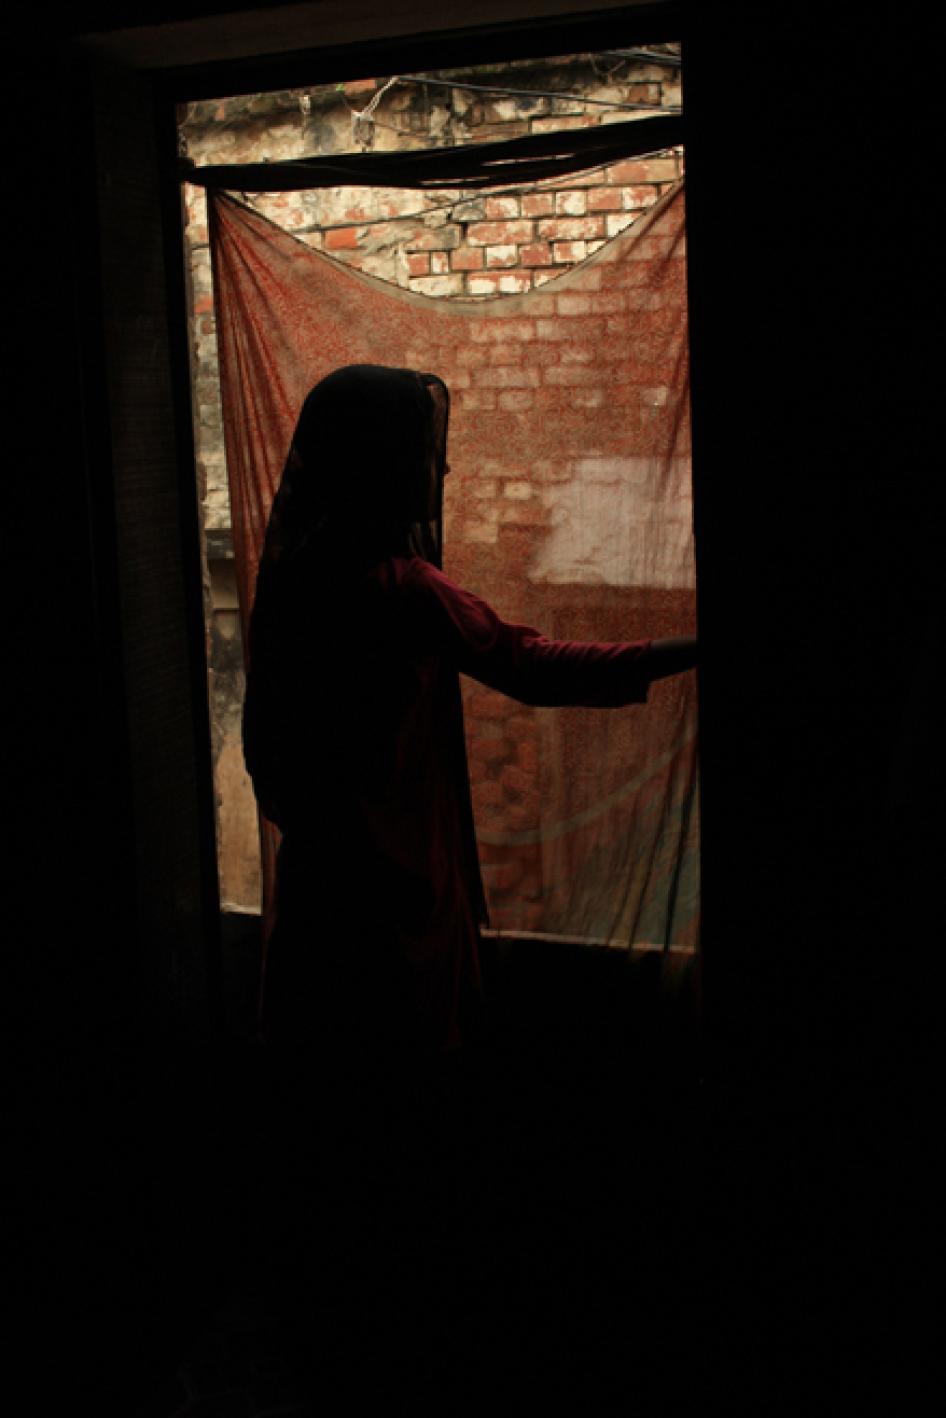 Saxi Full Rape Full Hd - South Asia Failing to Address Its Child Rape Problem | Human Rights Watch